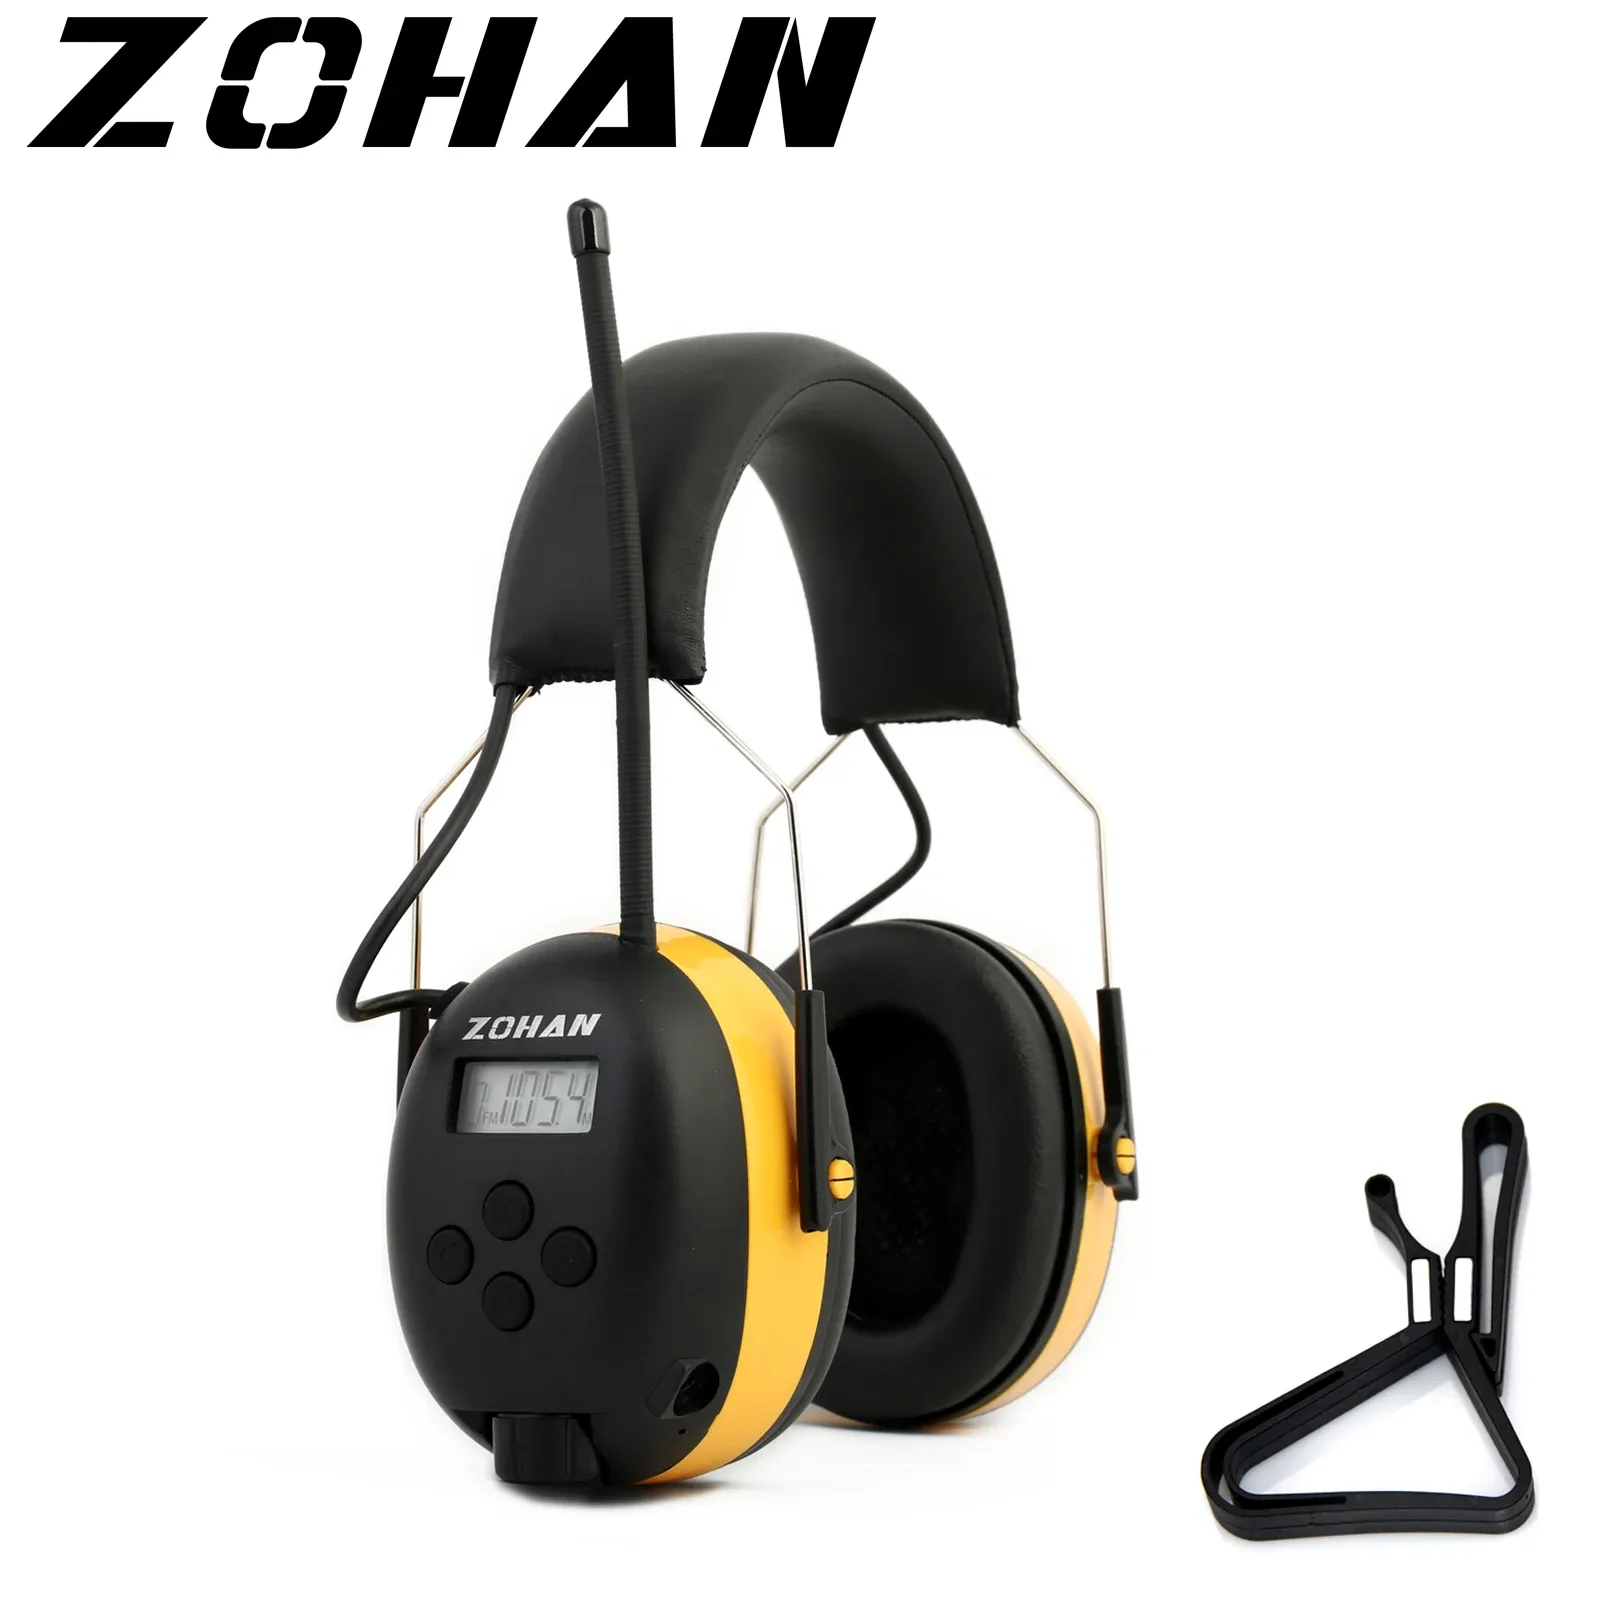 Radio Zohan Digital AM/FM Stereo Radio Ear Muffs NRR 24DB Ear Protection for Mowing Professional Hearing Protector Radio hörlurar